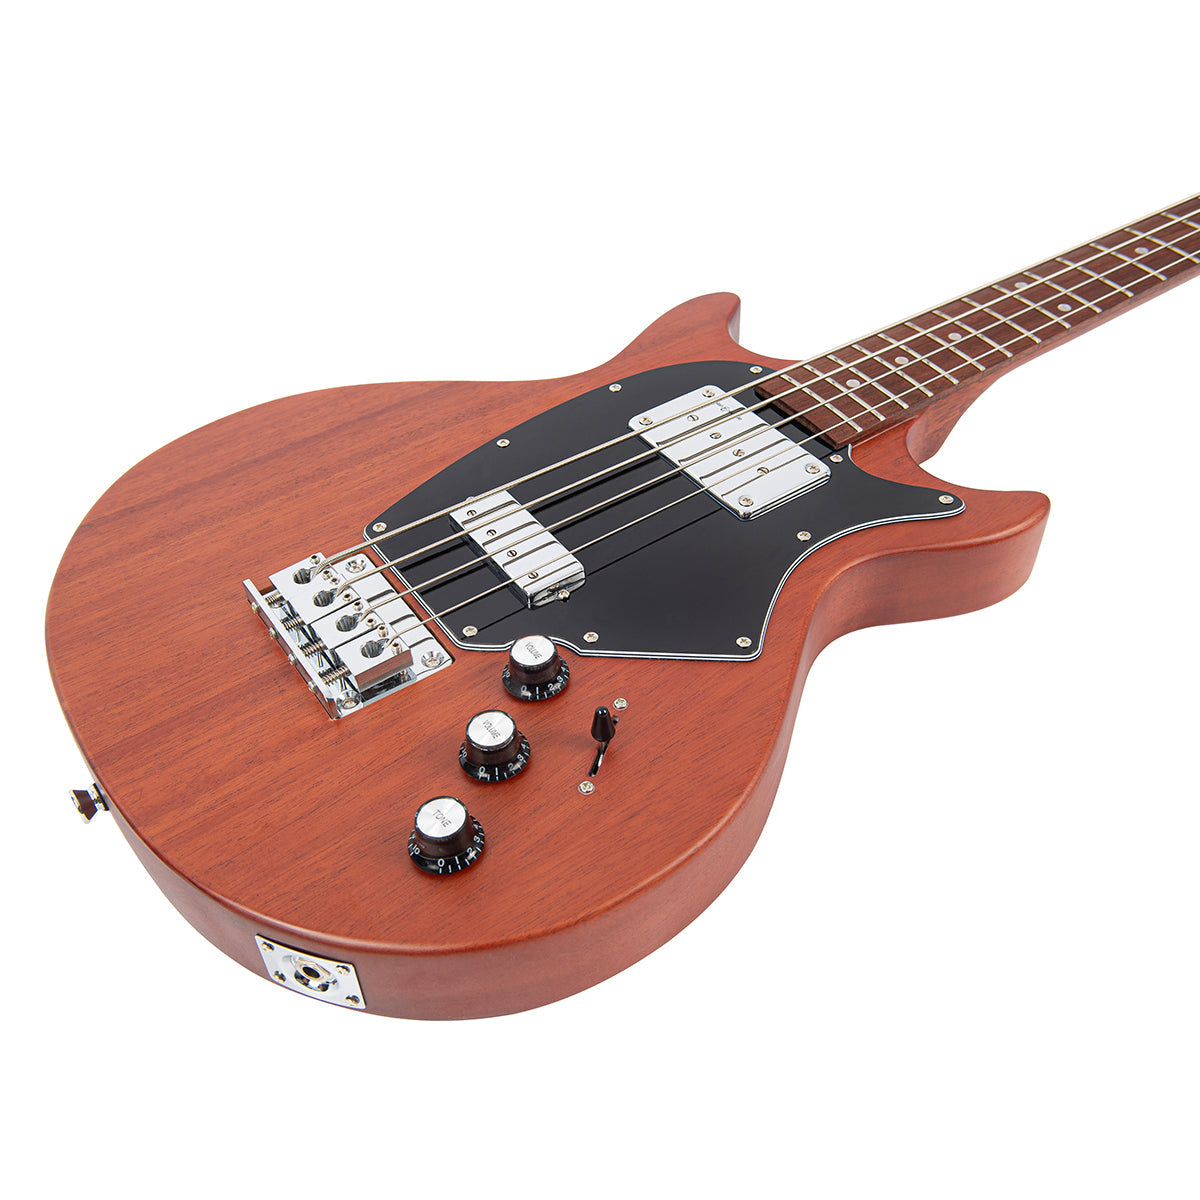 Vintage REVO Series 'Callan' Bass ~ Mahogany, Electric Guitars for sale at Richards Guitars.